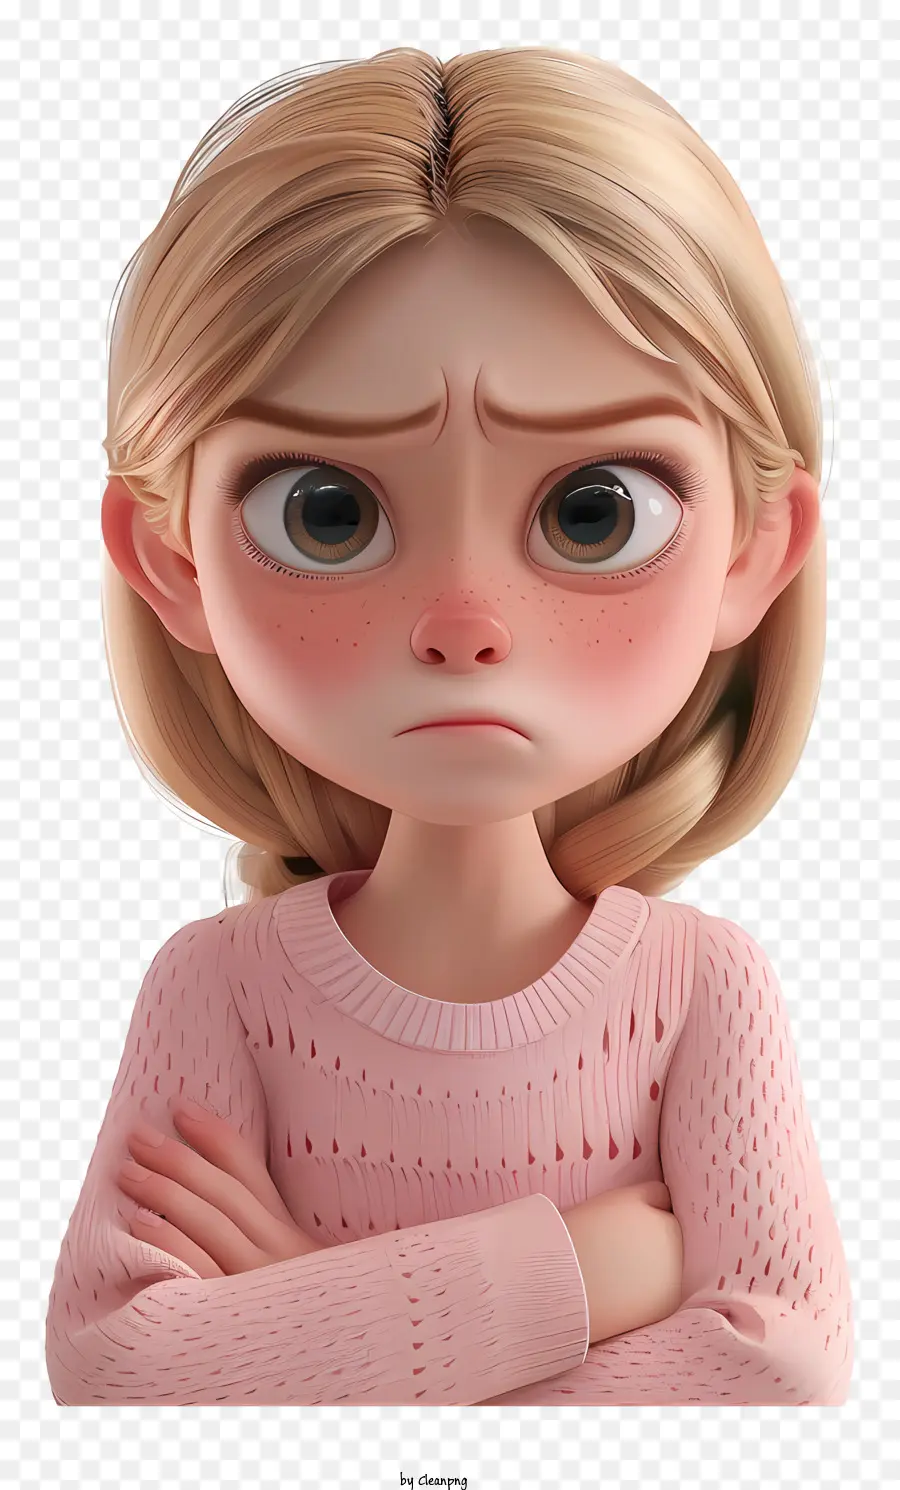 feeling sad woman blonde hair pink sweater sad